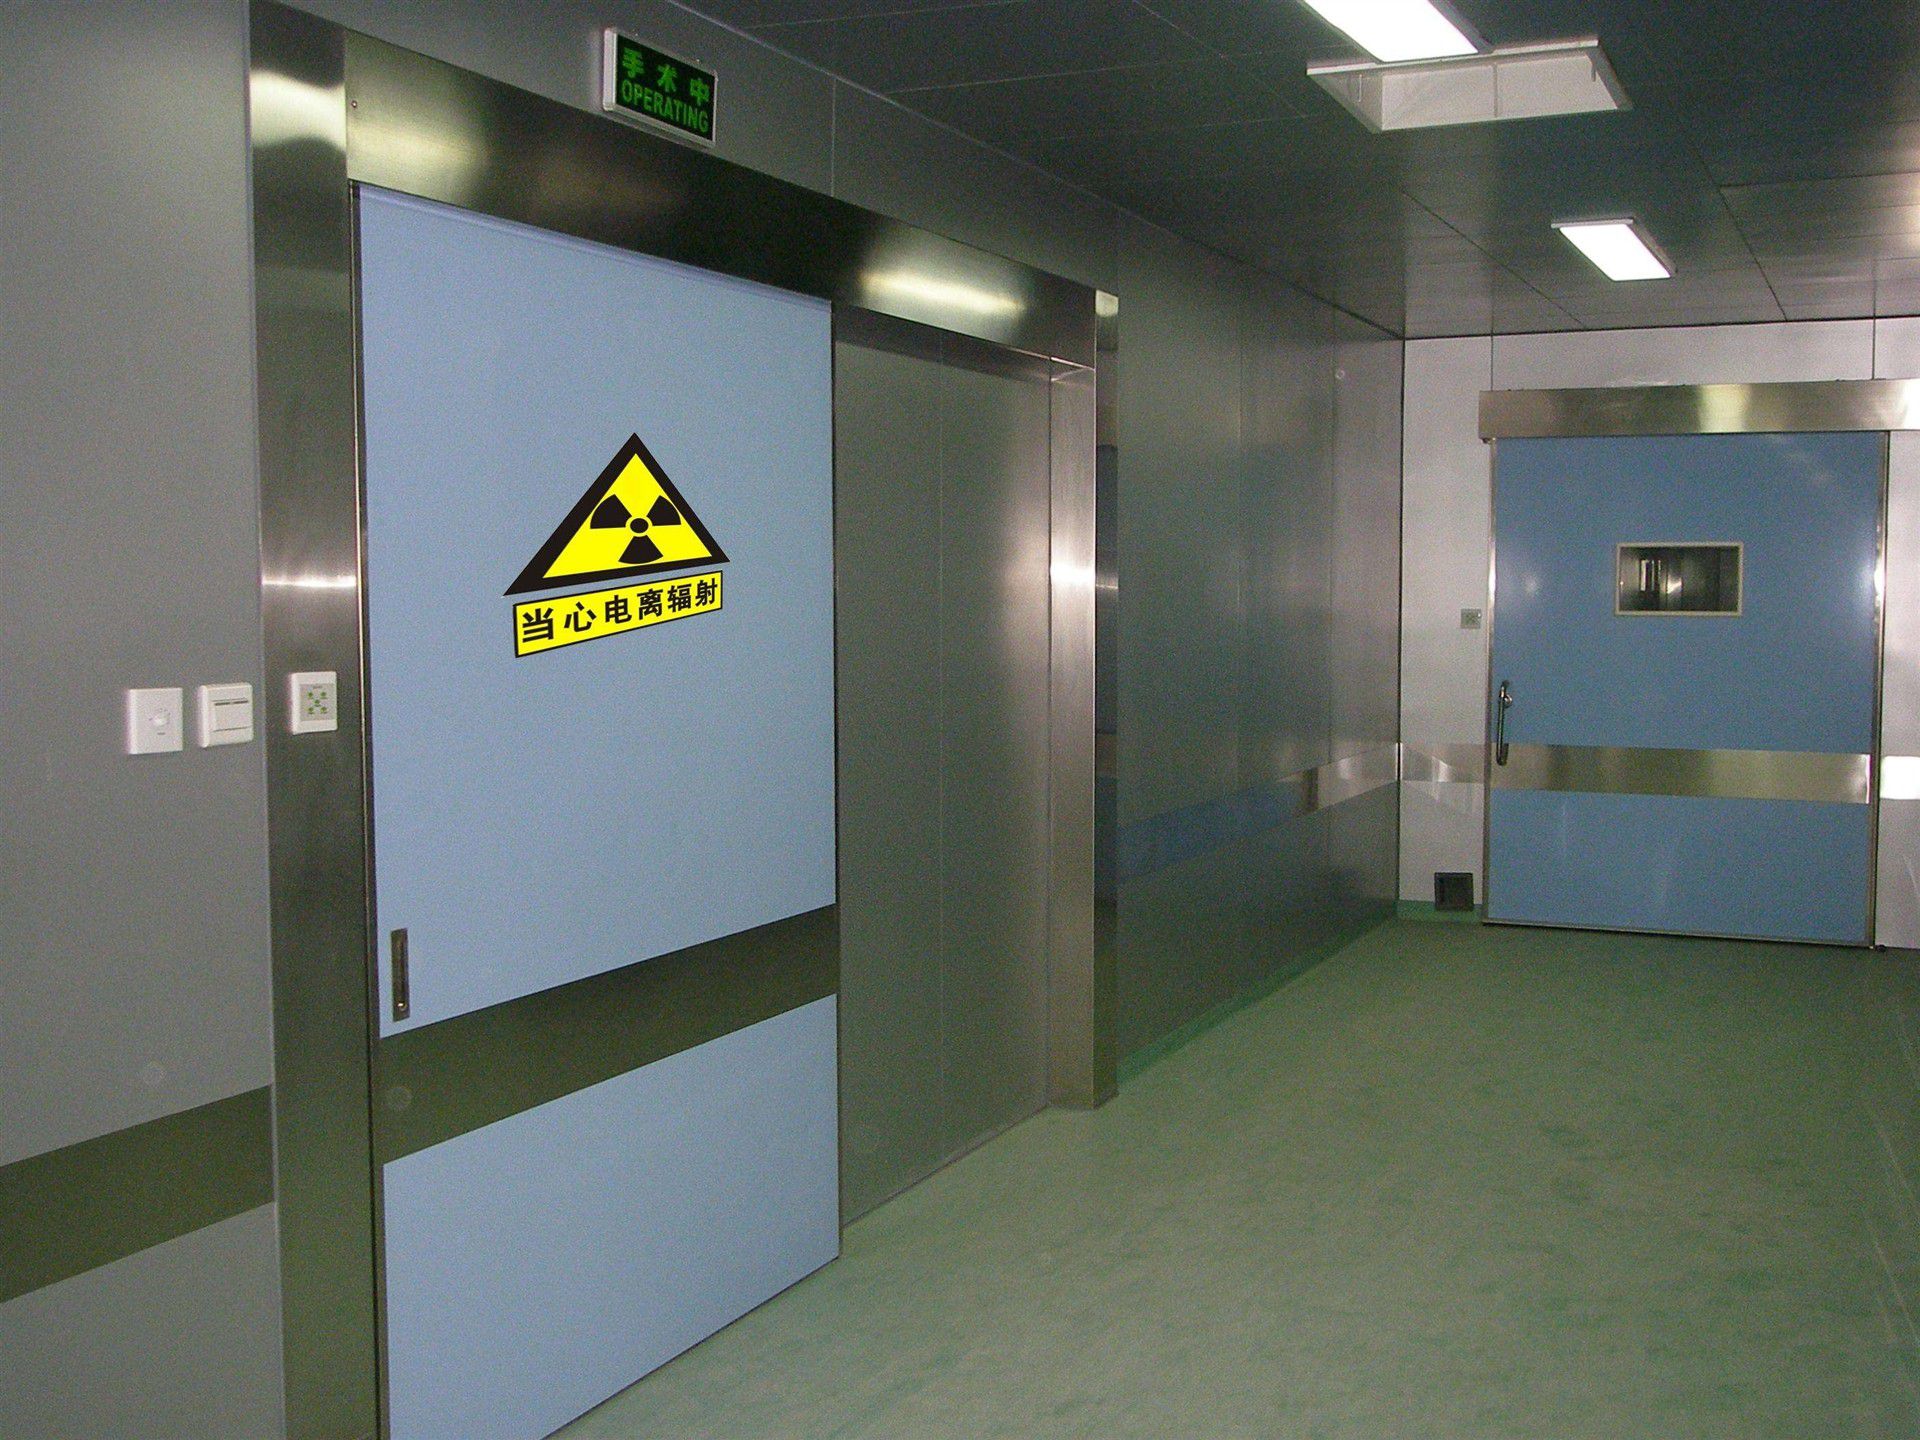 CT室铅门,铅箱,3mm铅板,CT室铅板,放射科铅板,铅板厂家-灯塔CT室铅板公司